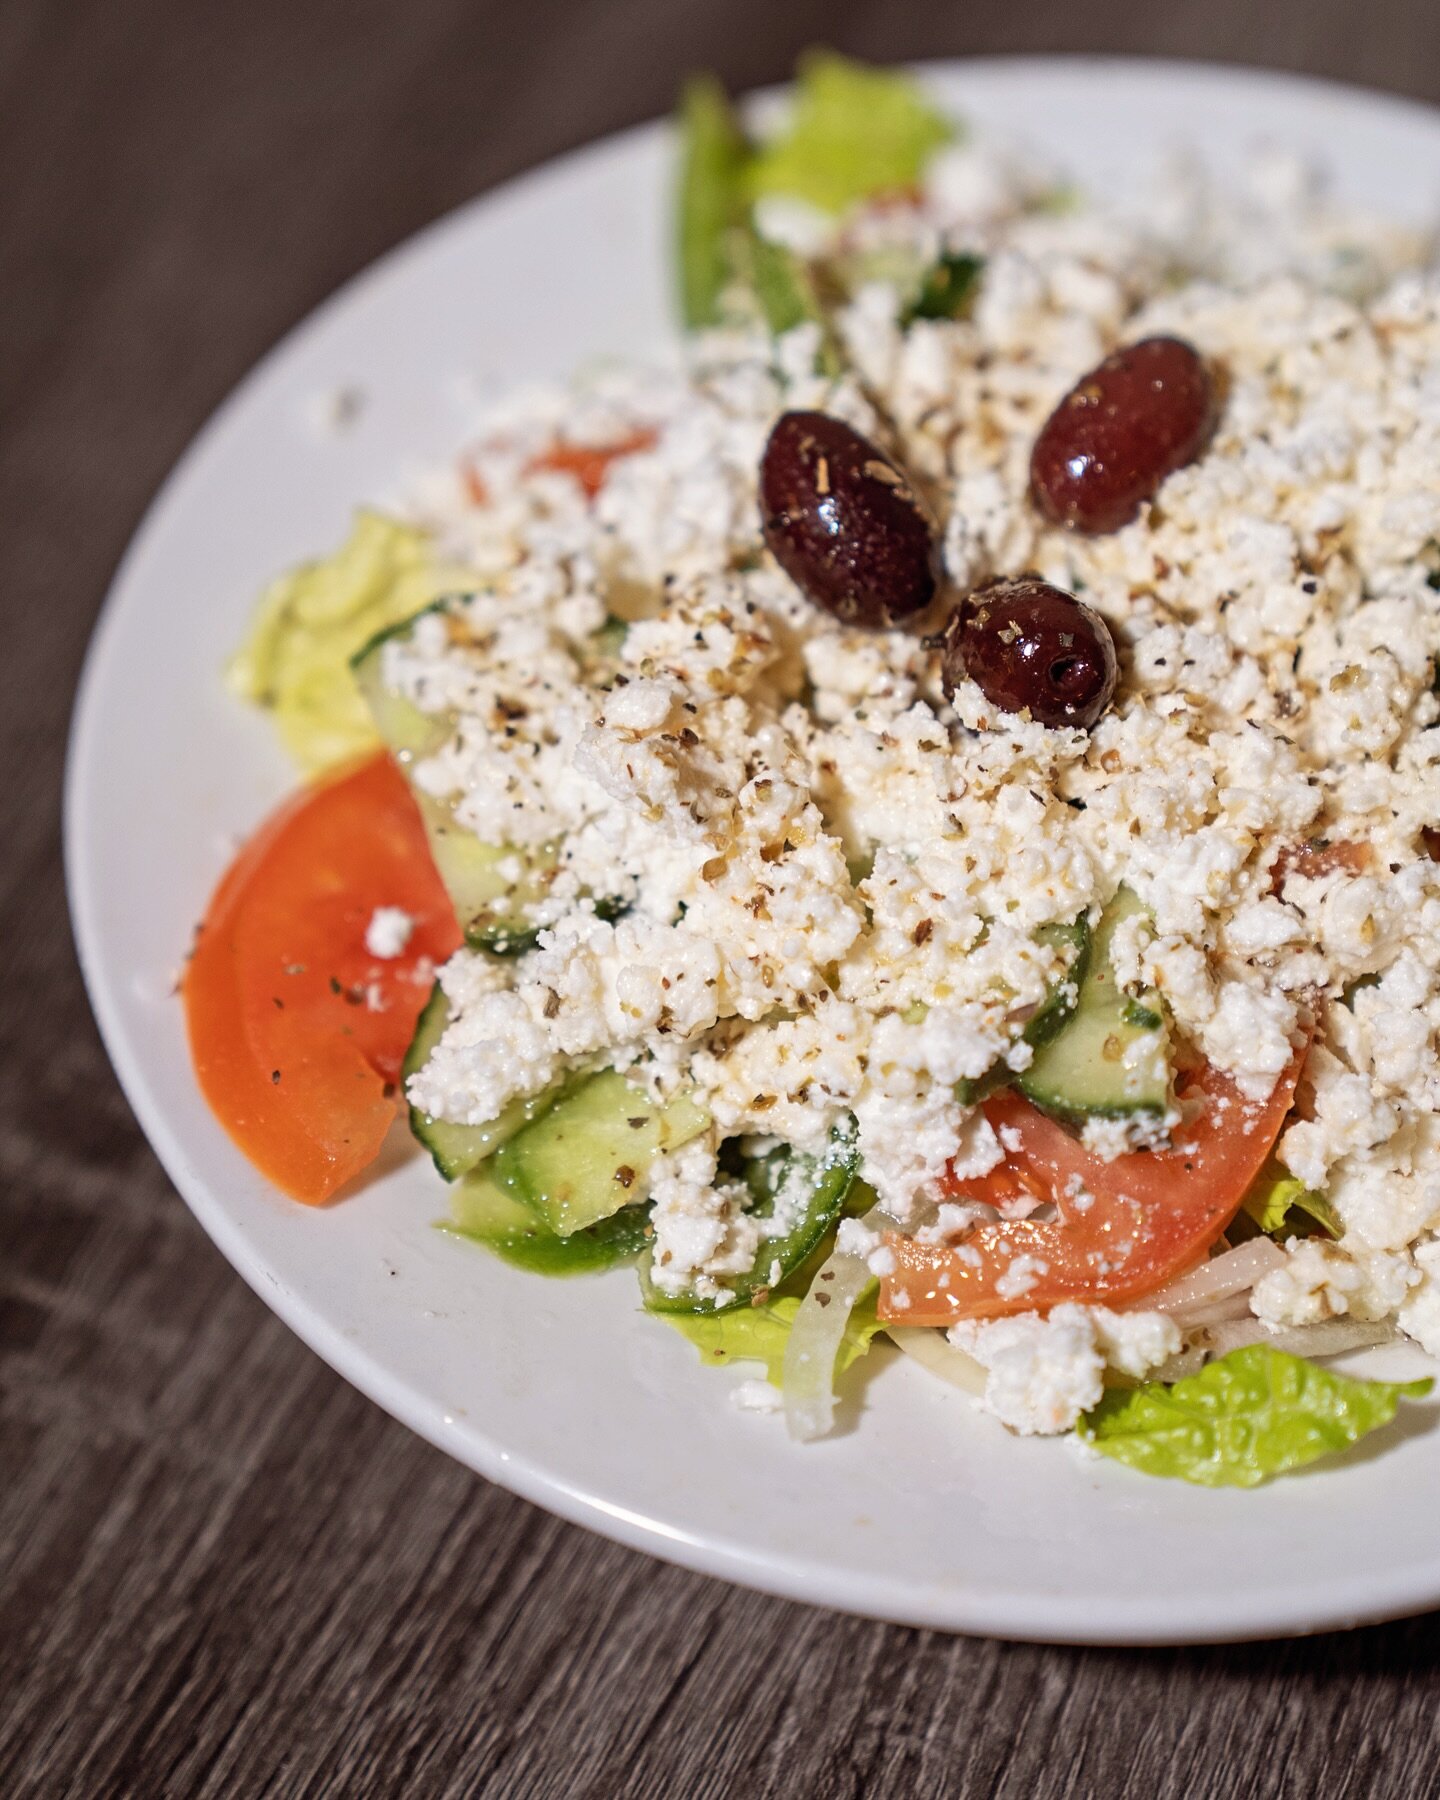 Thessaloniki style Greek salad 🥙
#ClassicCafeAndLounge